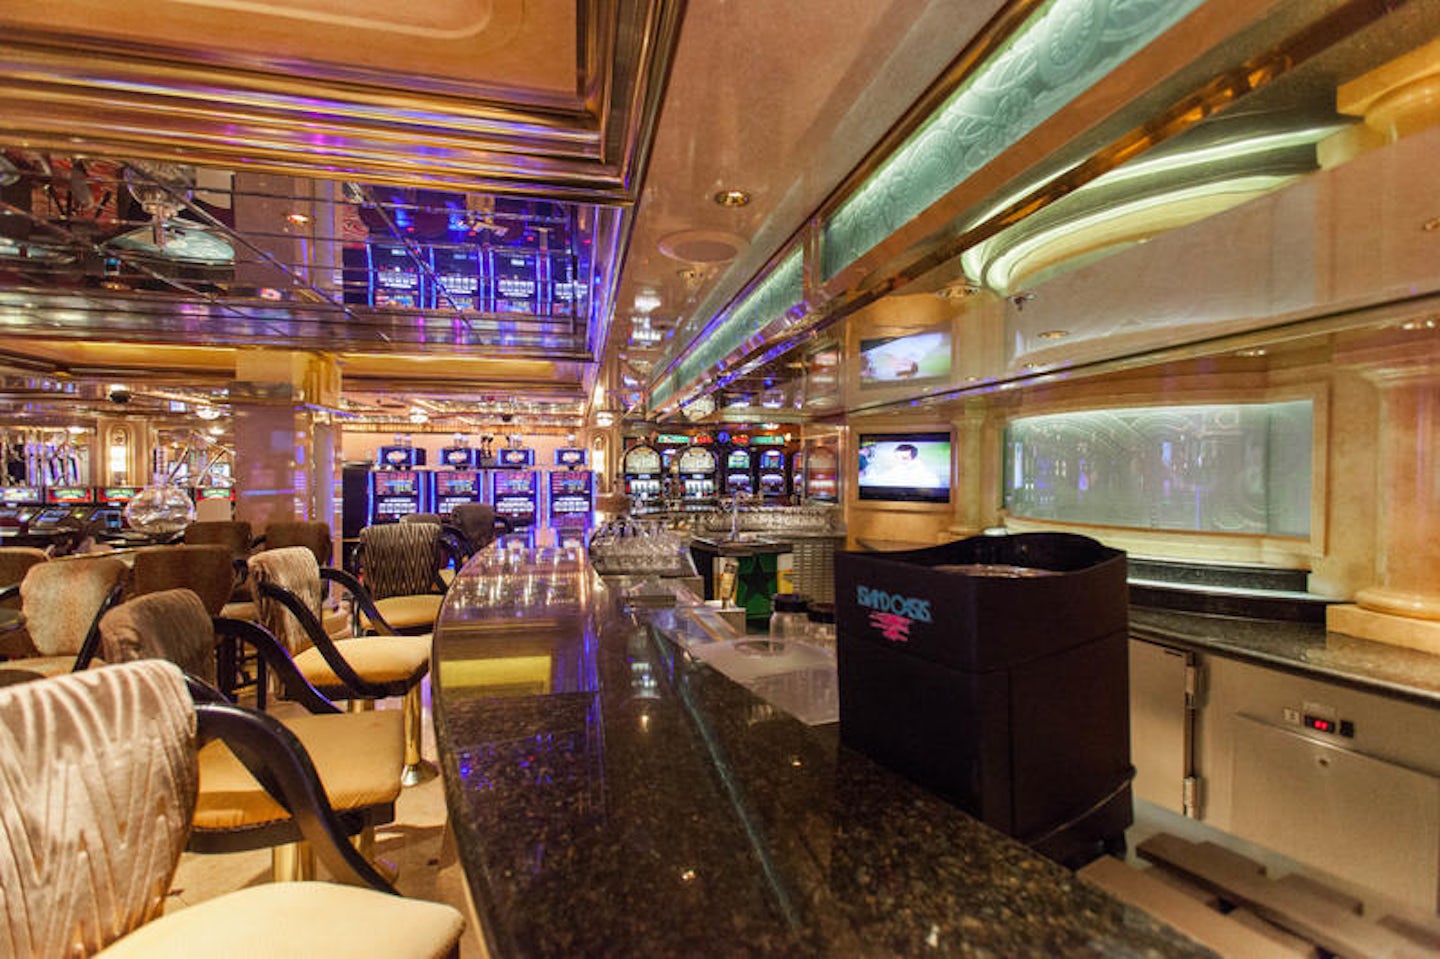 Fortunes Casino on Celebrity Constellation